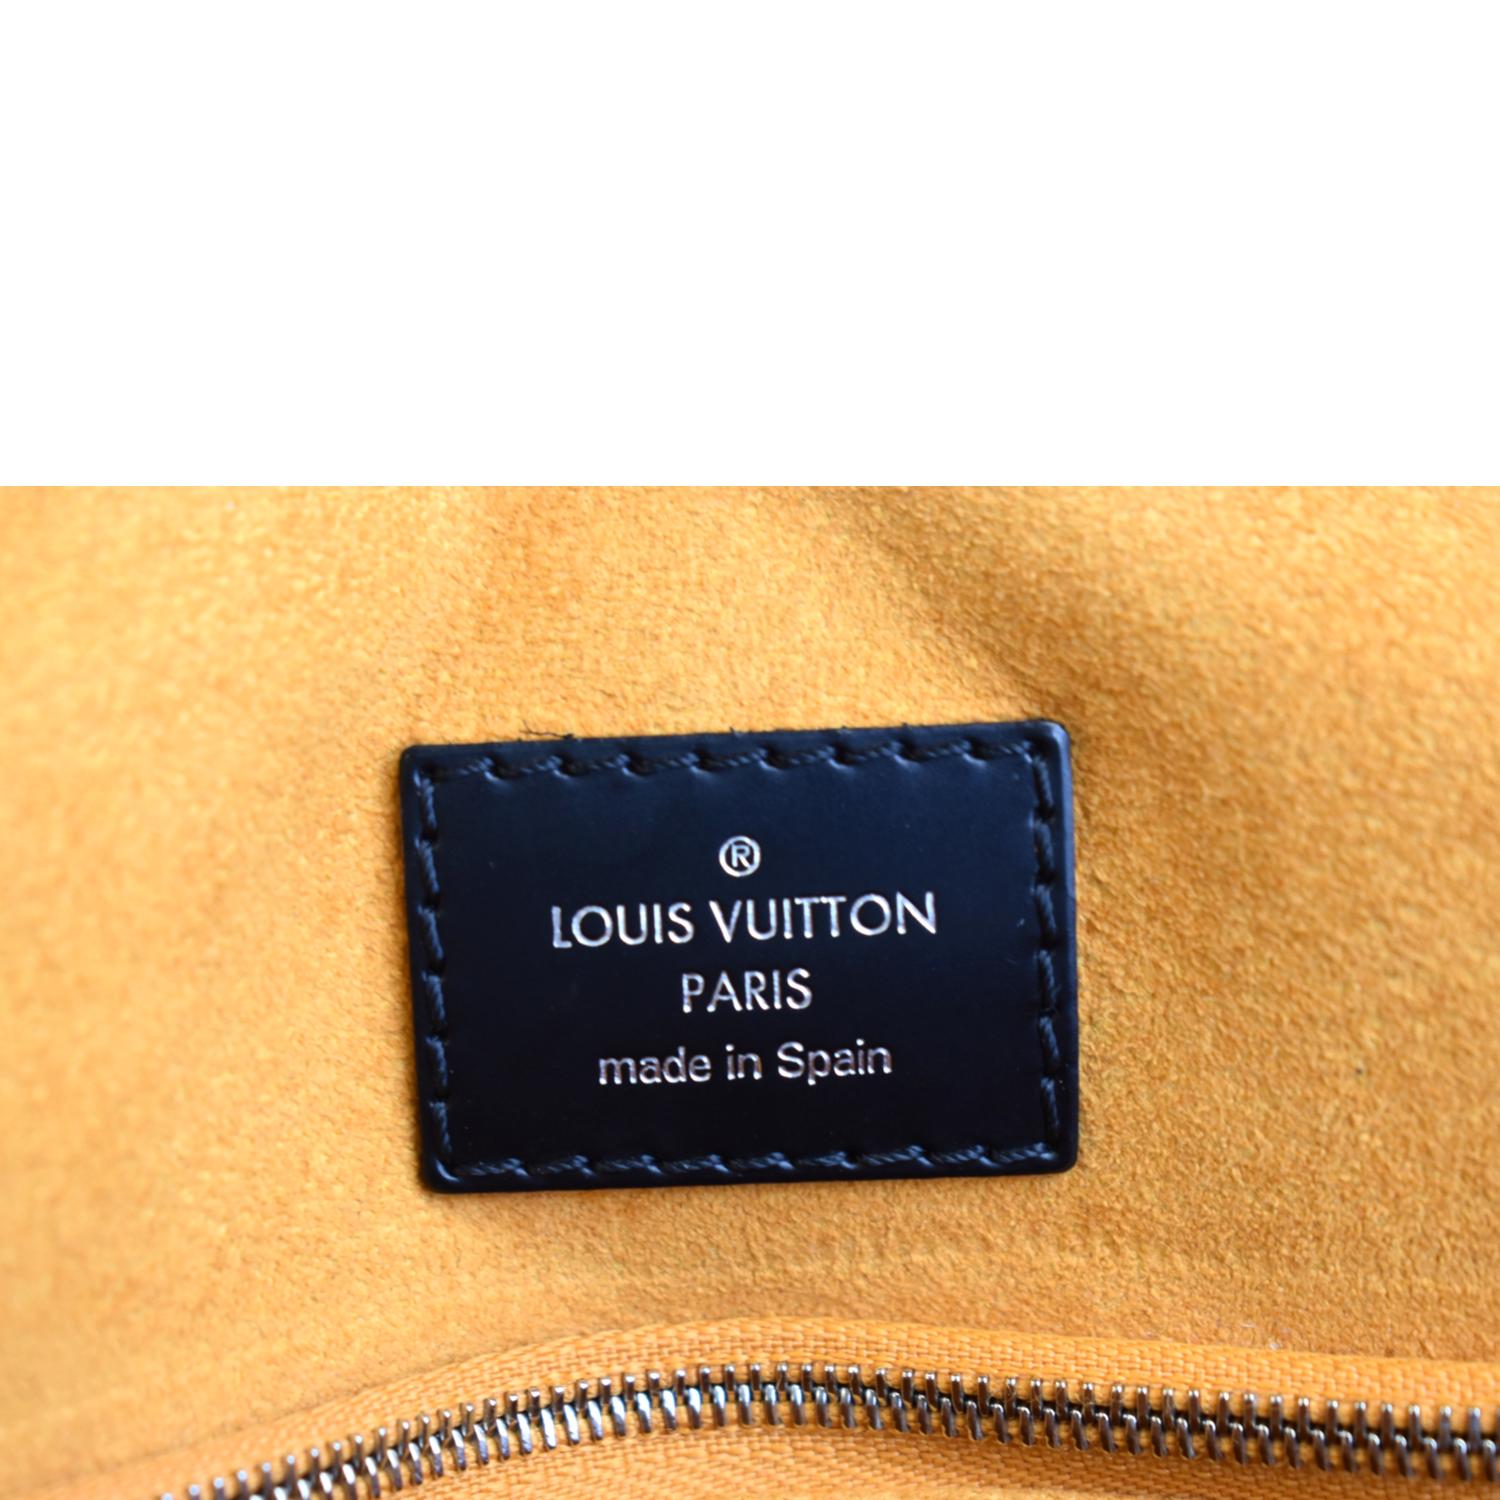 the Louis Vuitton Grenelle PM